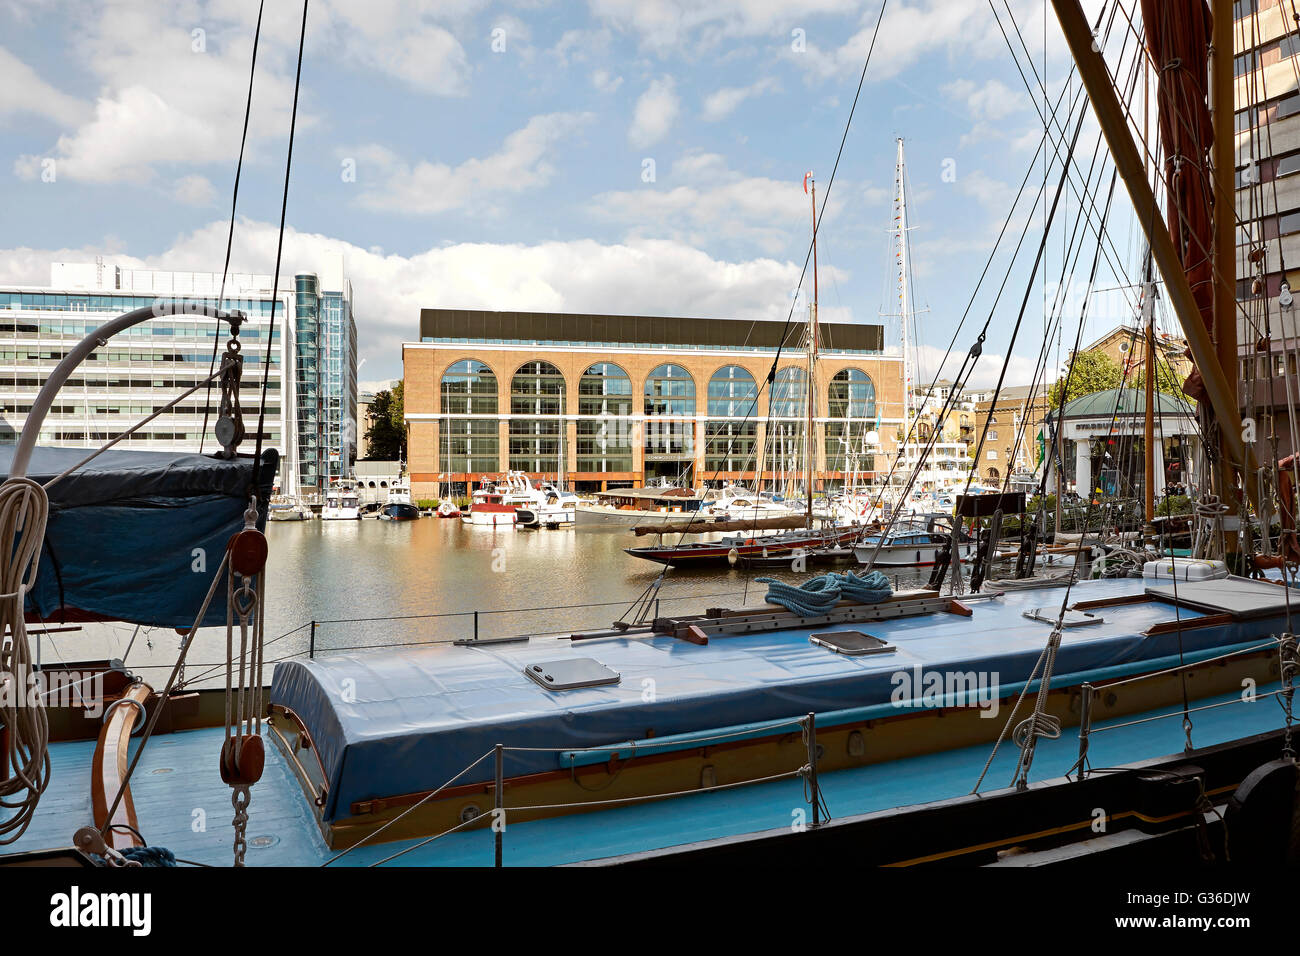 View across marina with barge towards refurbished office building. Commodity Quay, London, United Kingdom. Architect: BuckleyGrayYeoman, 2014. Stock Photo